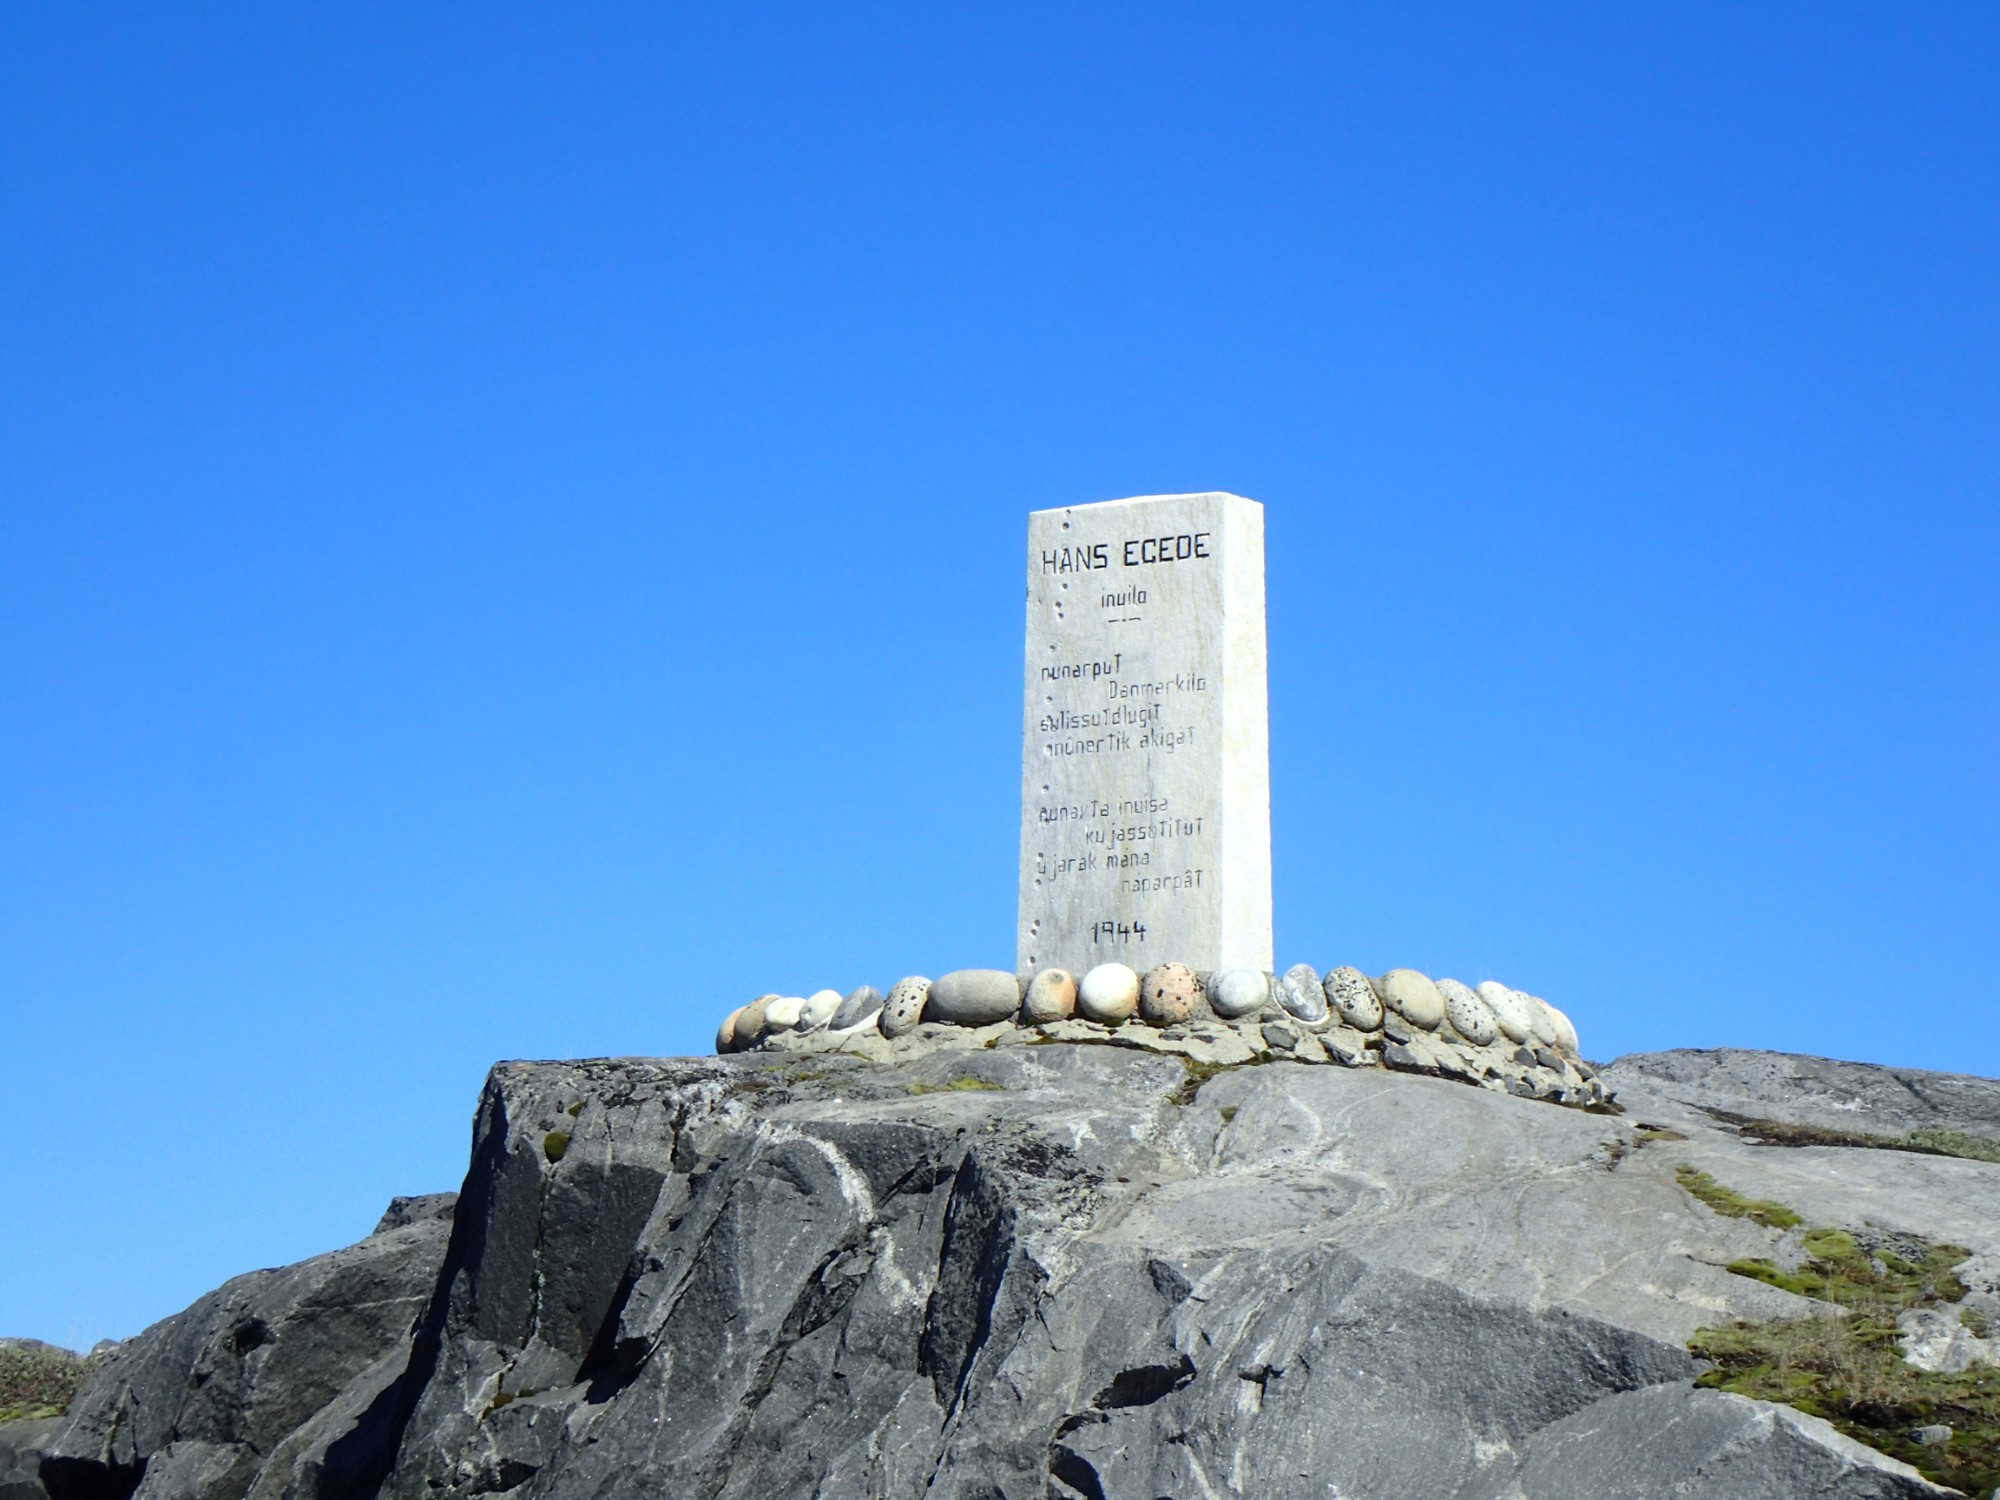 Hans Egede Memorial, Greenland